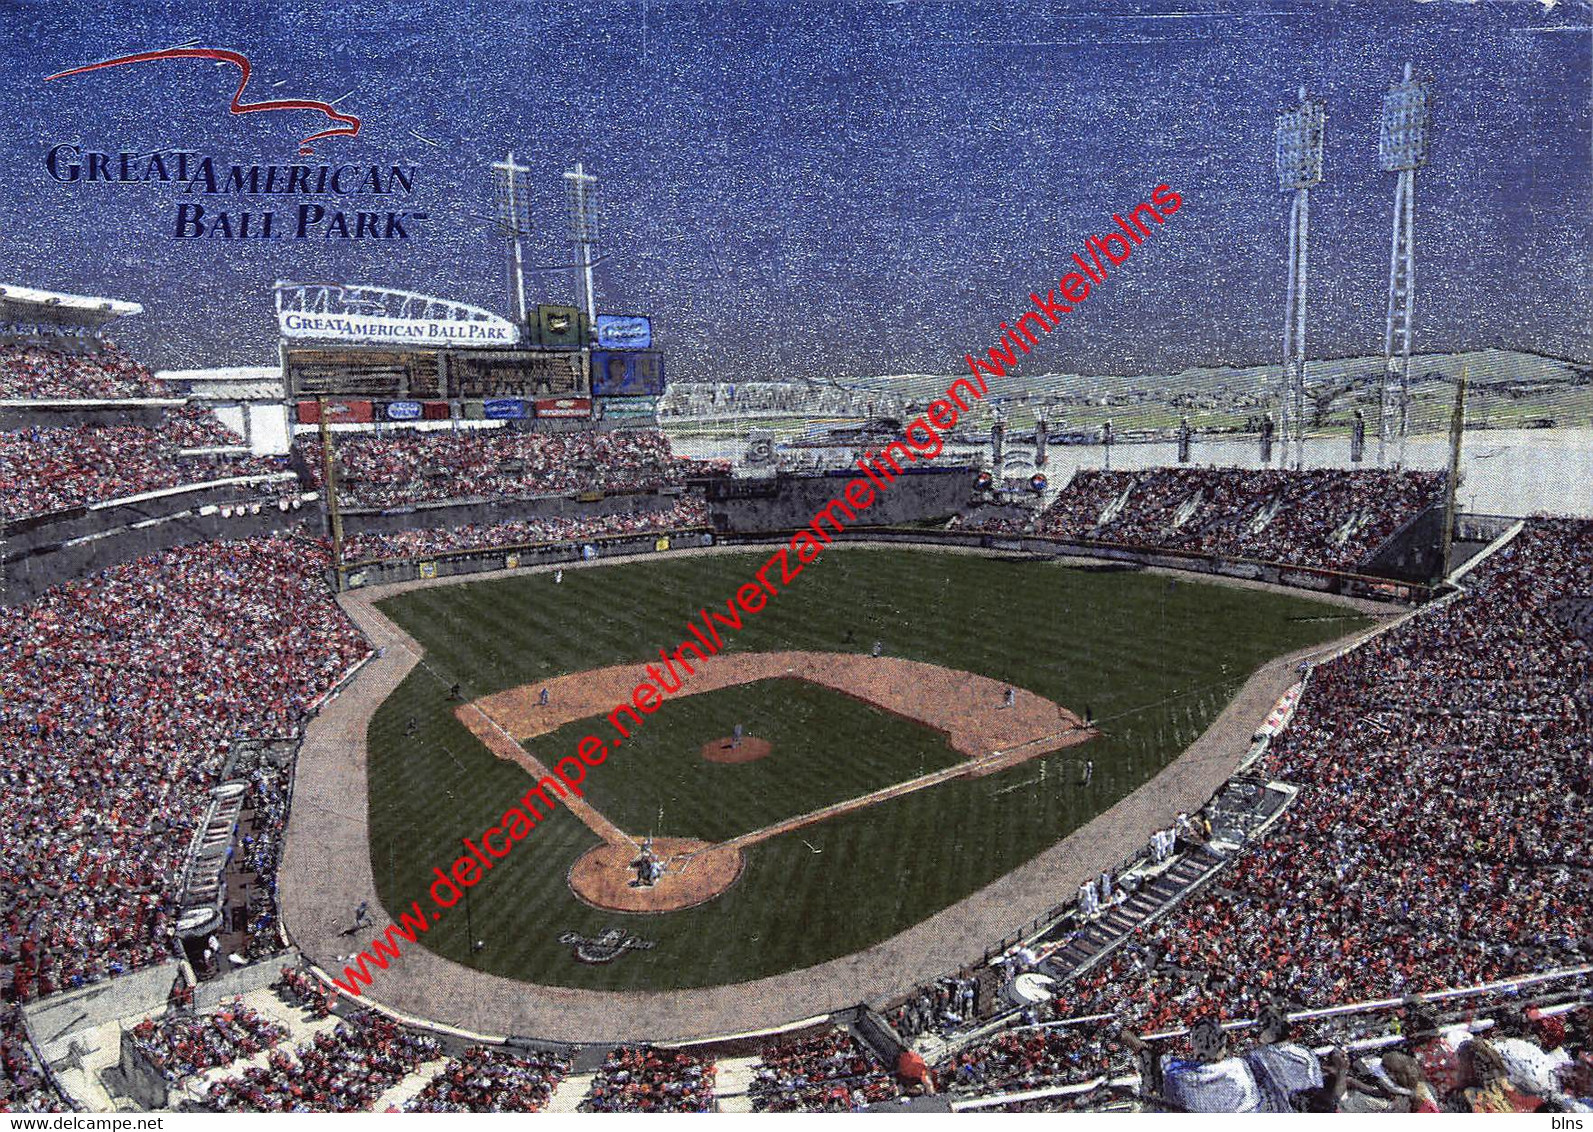 Cincinnati - The Great American Ballpark - Baseball - Ohio United States - Cincinnati